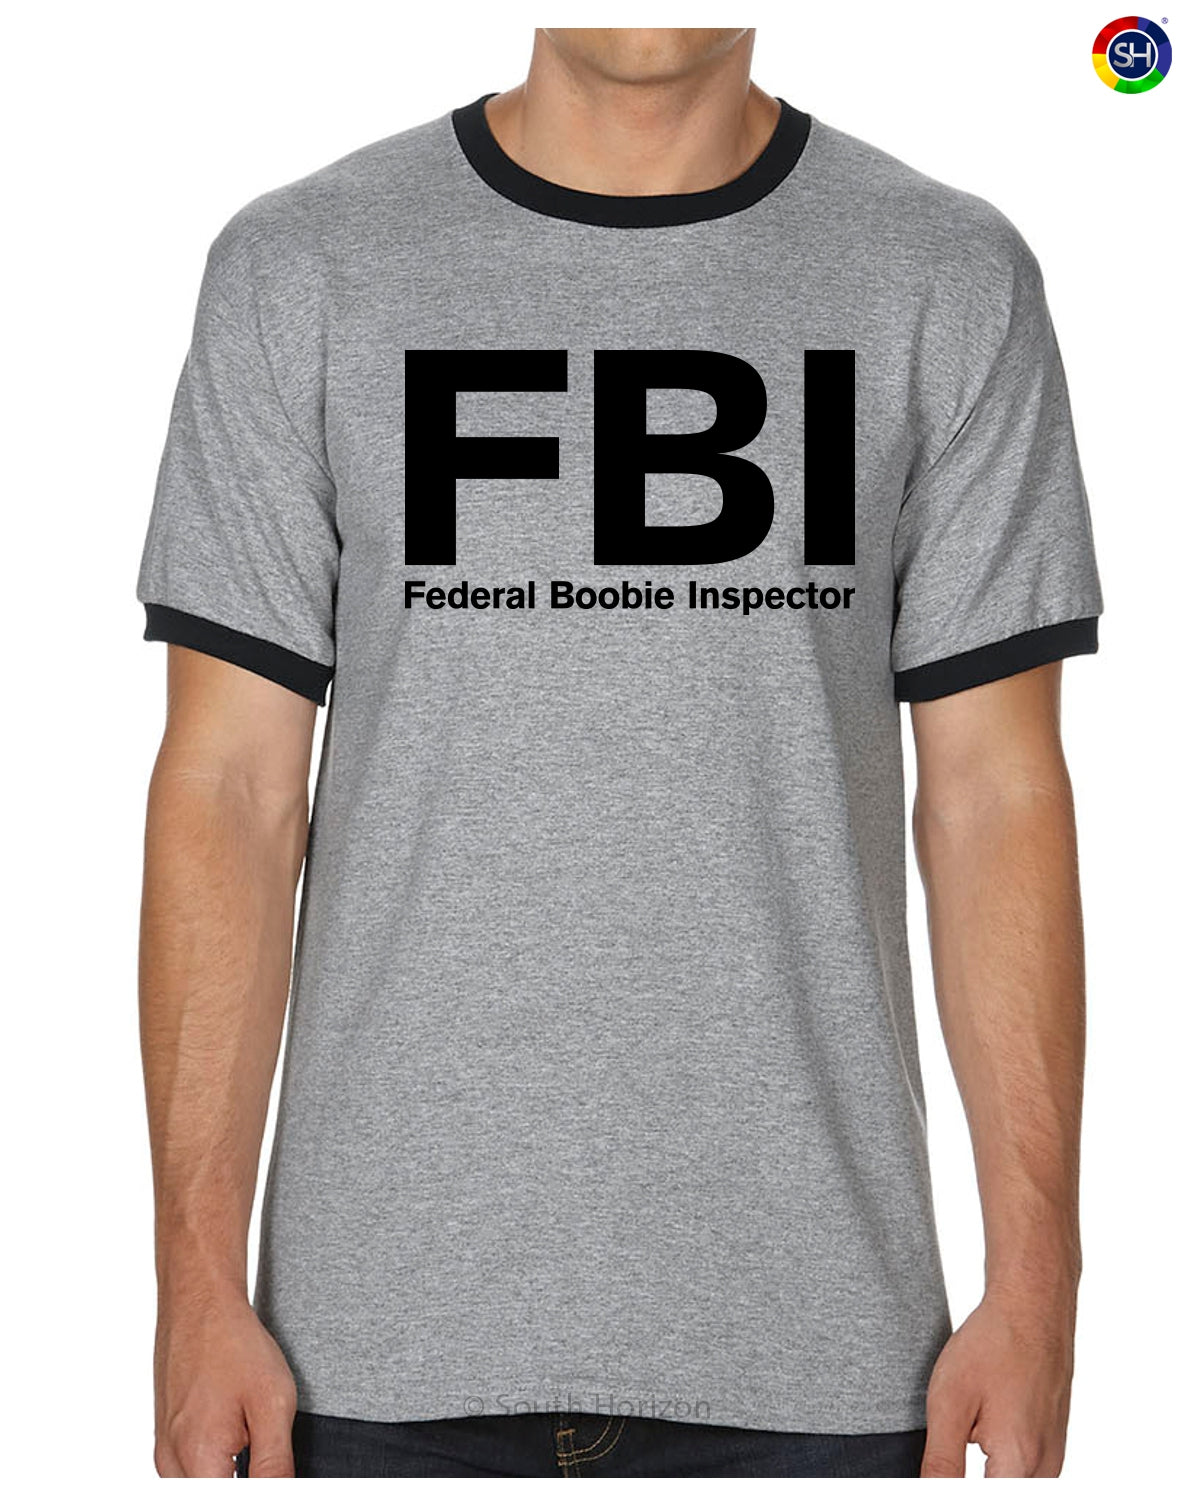 Federal Boobie Inspector Ringer Tee